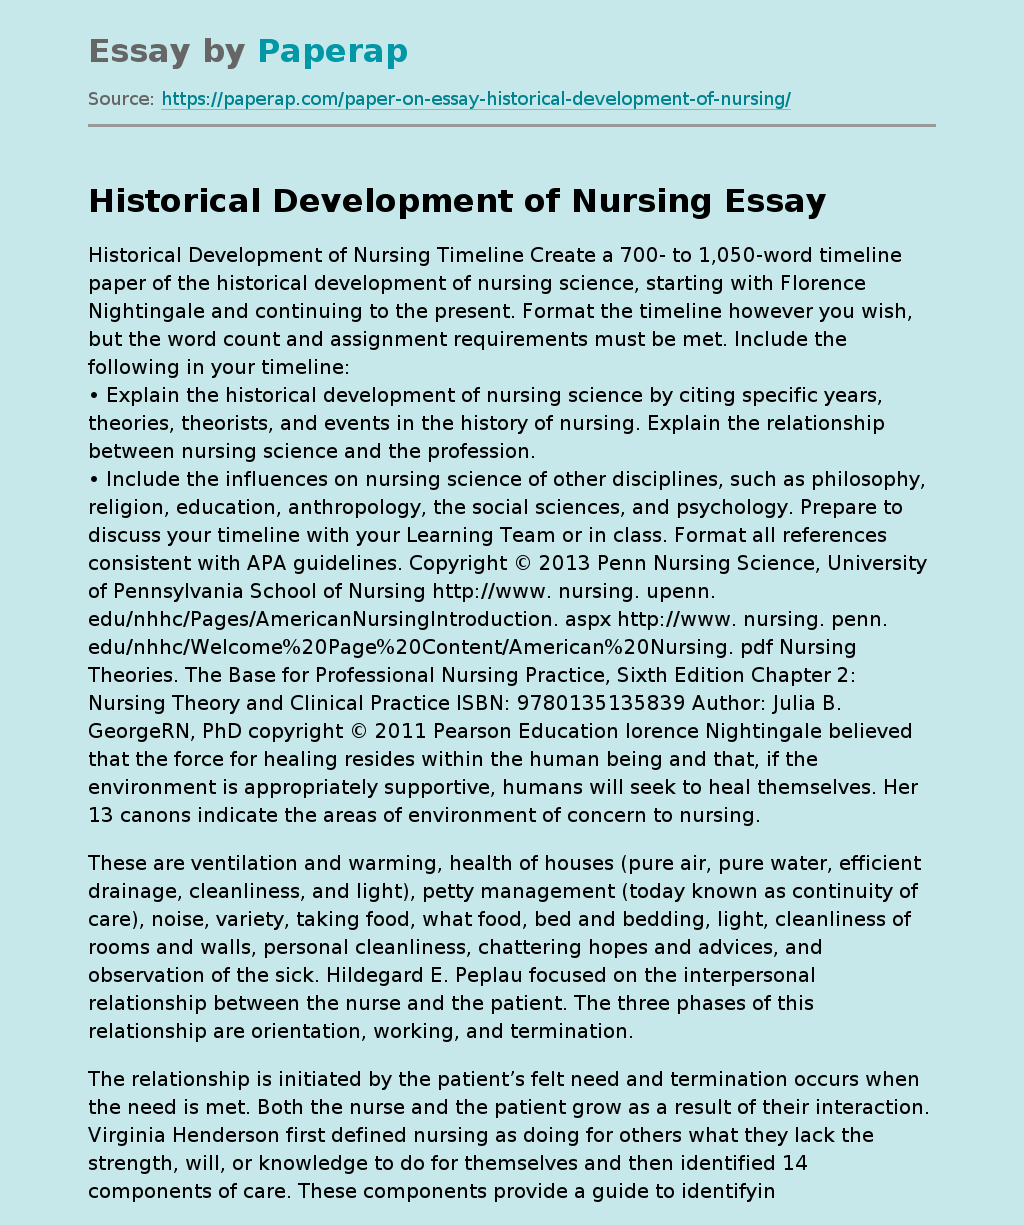 Historical Development of Nursing Timeline